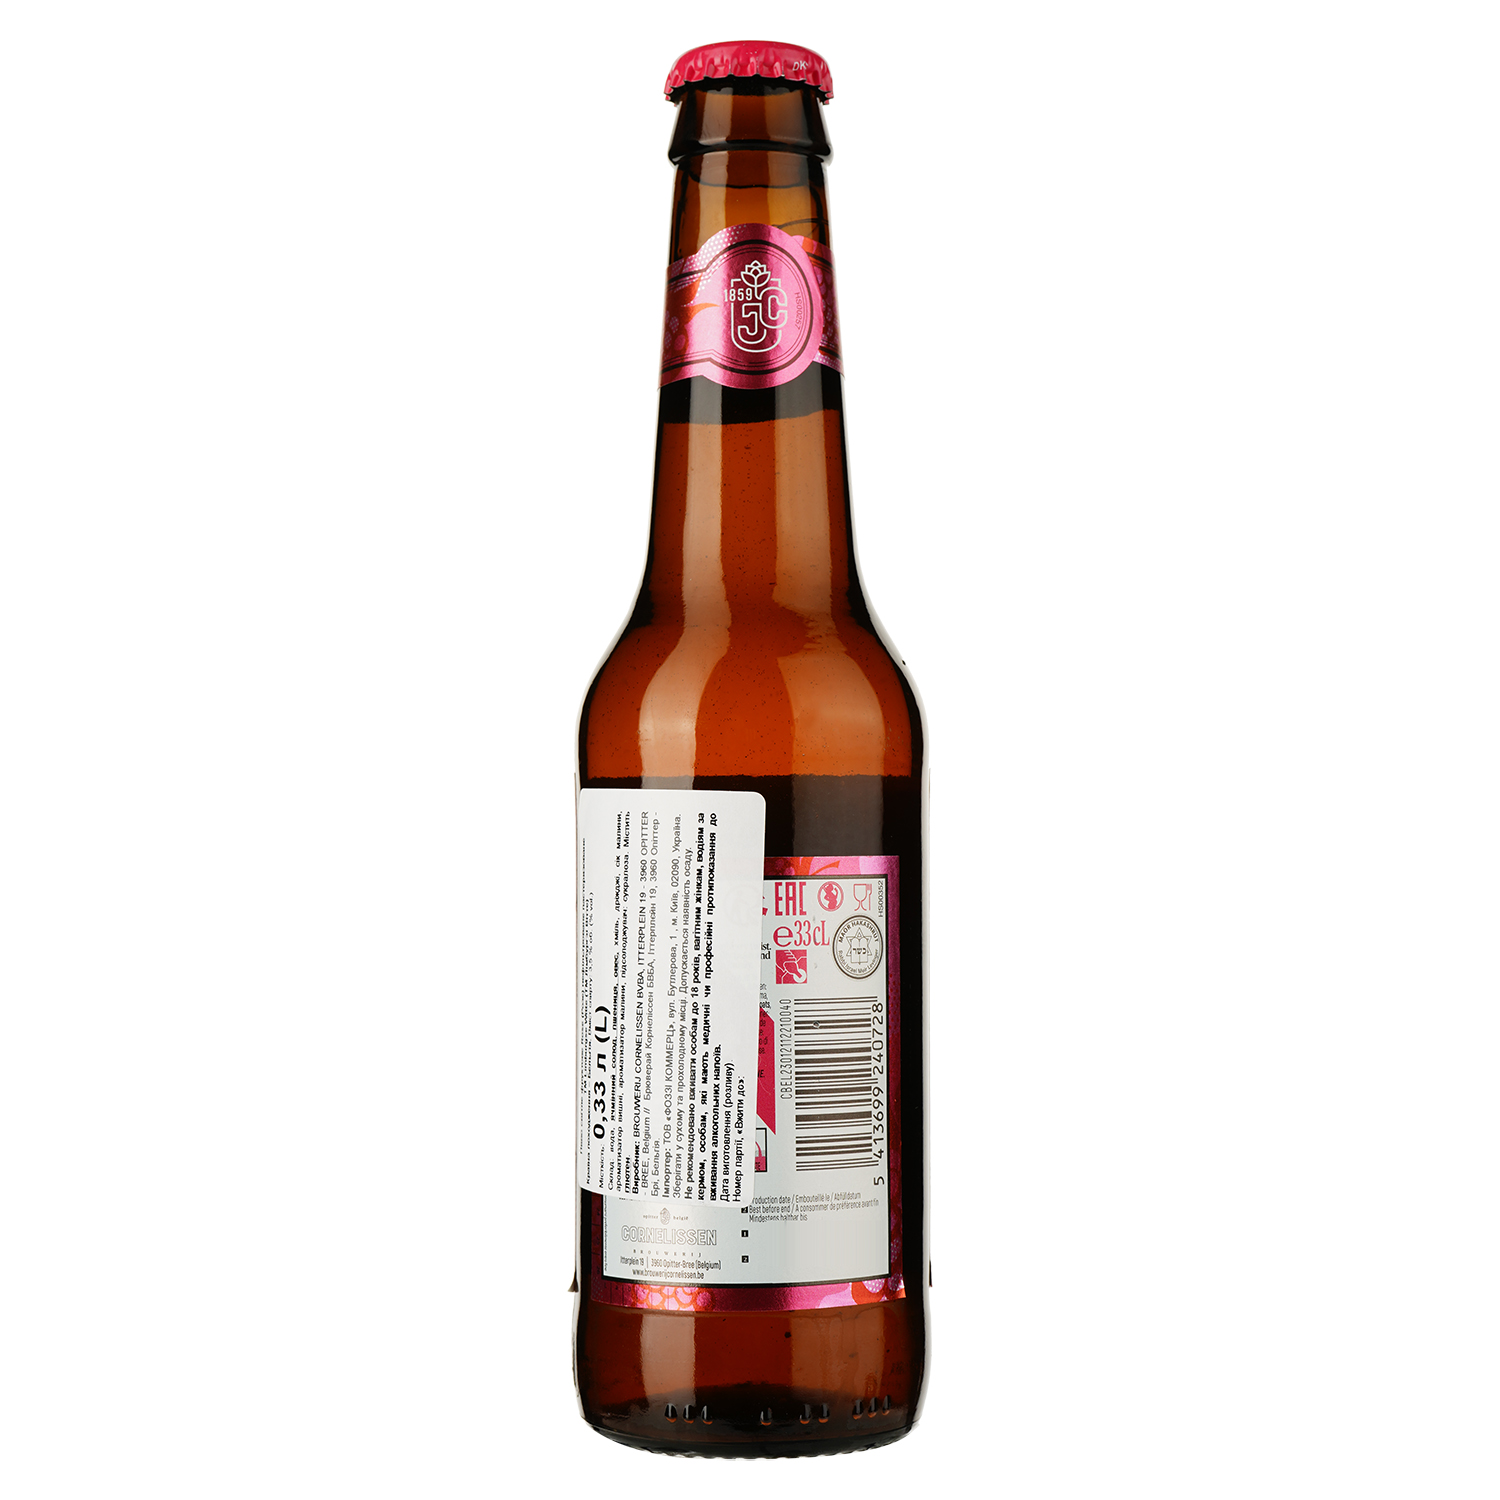 Пиво Limburgse Witte Rose біле 3.5% 0.33 л - фото 2